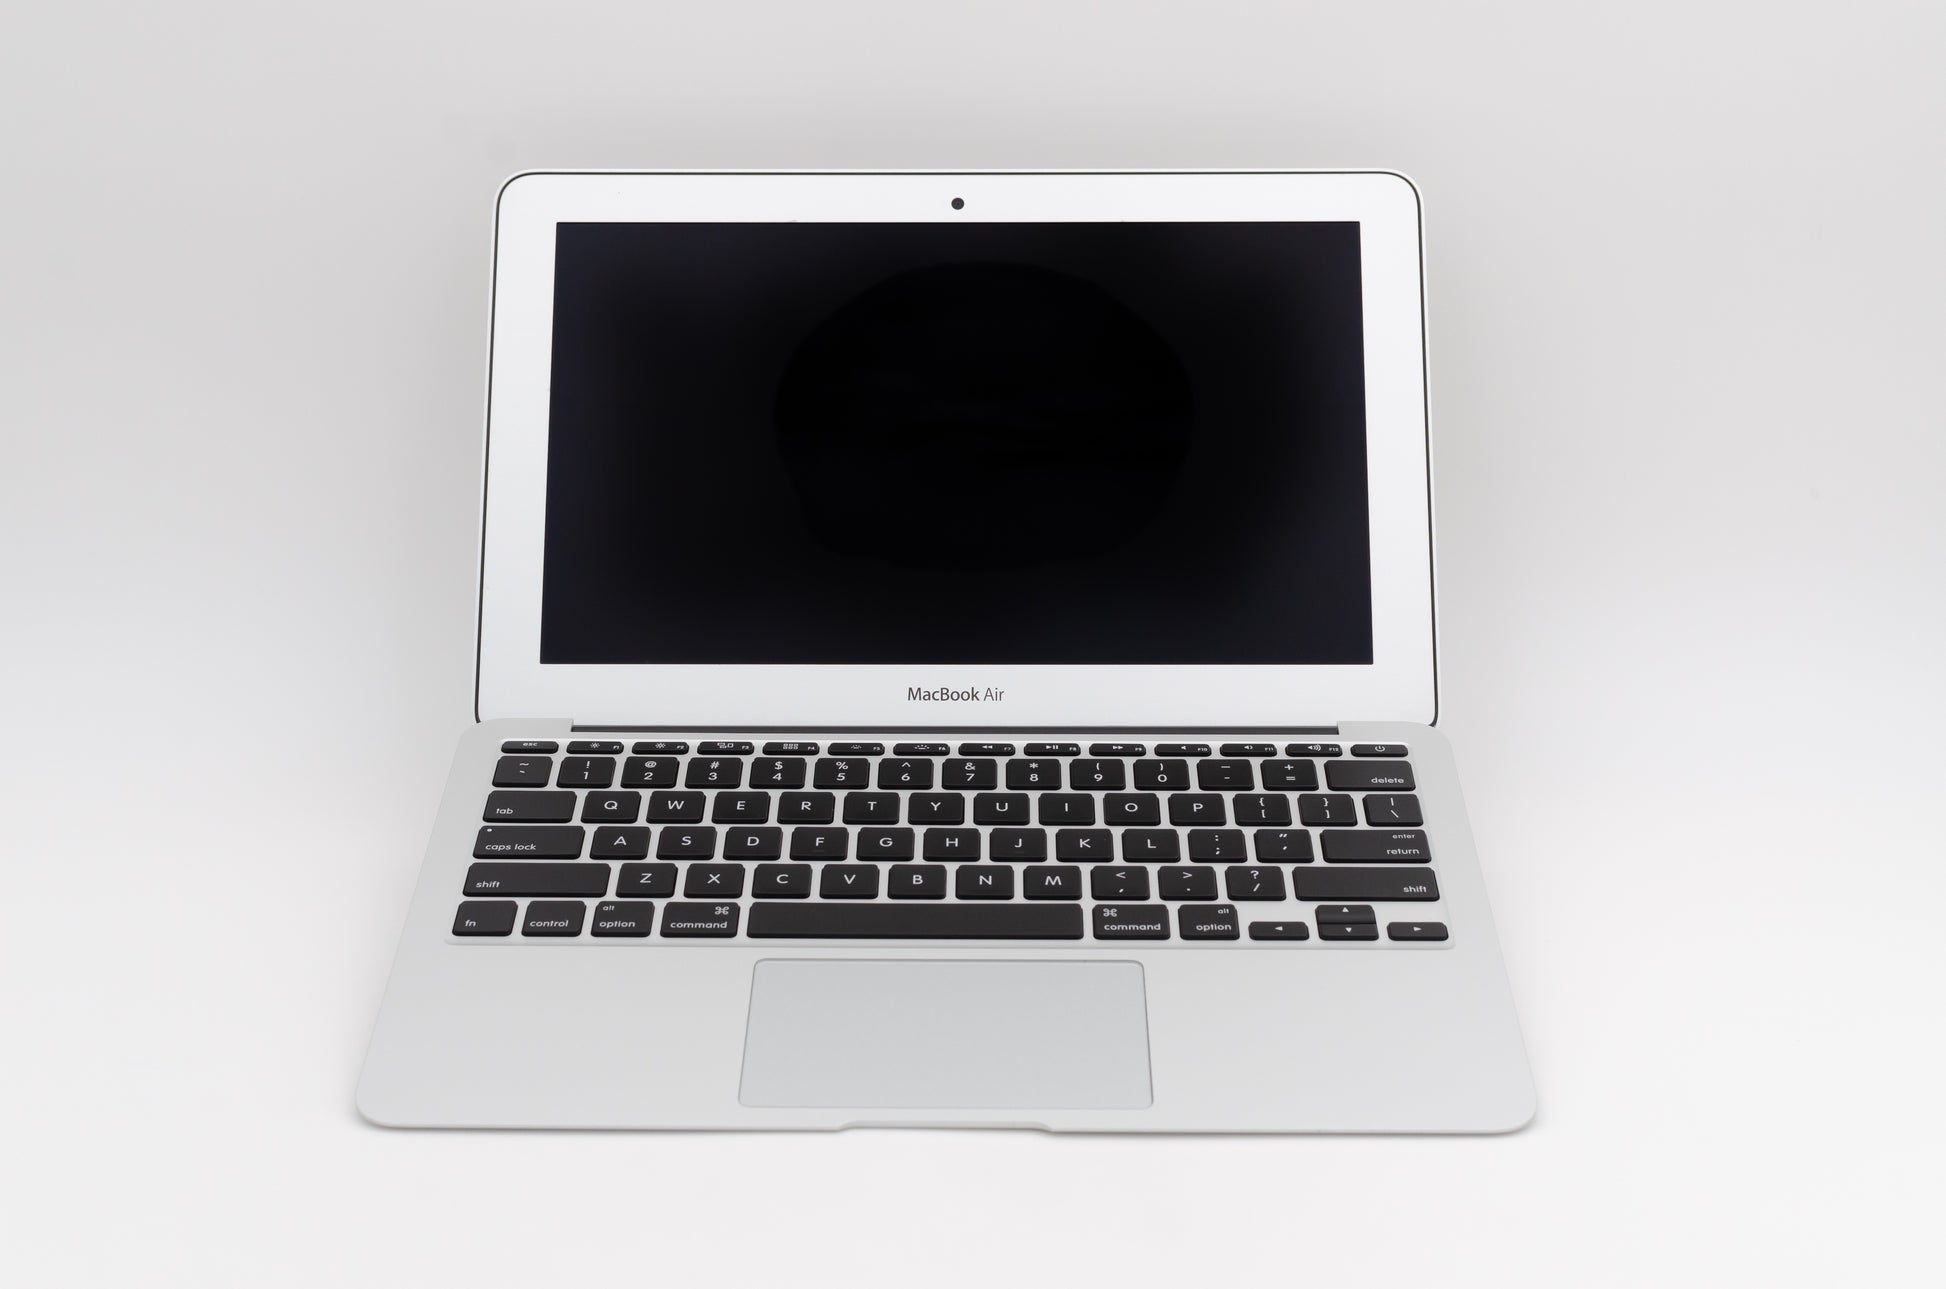 apple-mid-2012-11.6-inch-macbook-air-a1465-aluminum-dci7 - 2ghz processor, 8gb ram, hd 4000 - 512mb gpu-md845ll/a-5